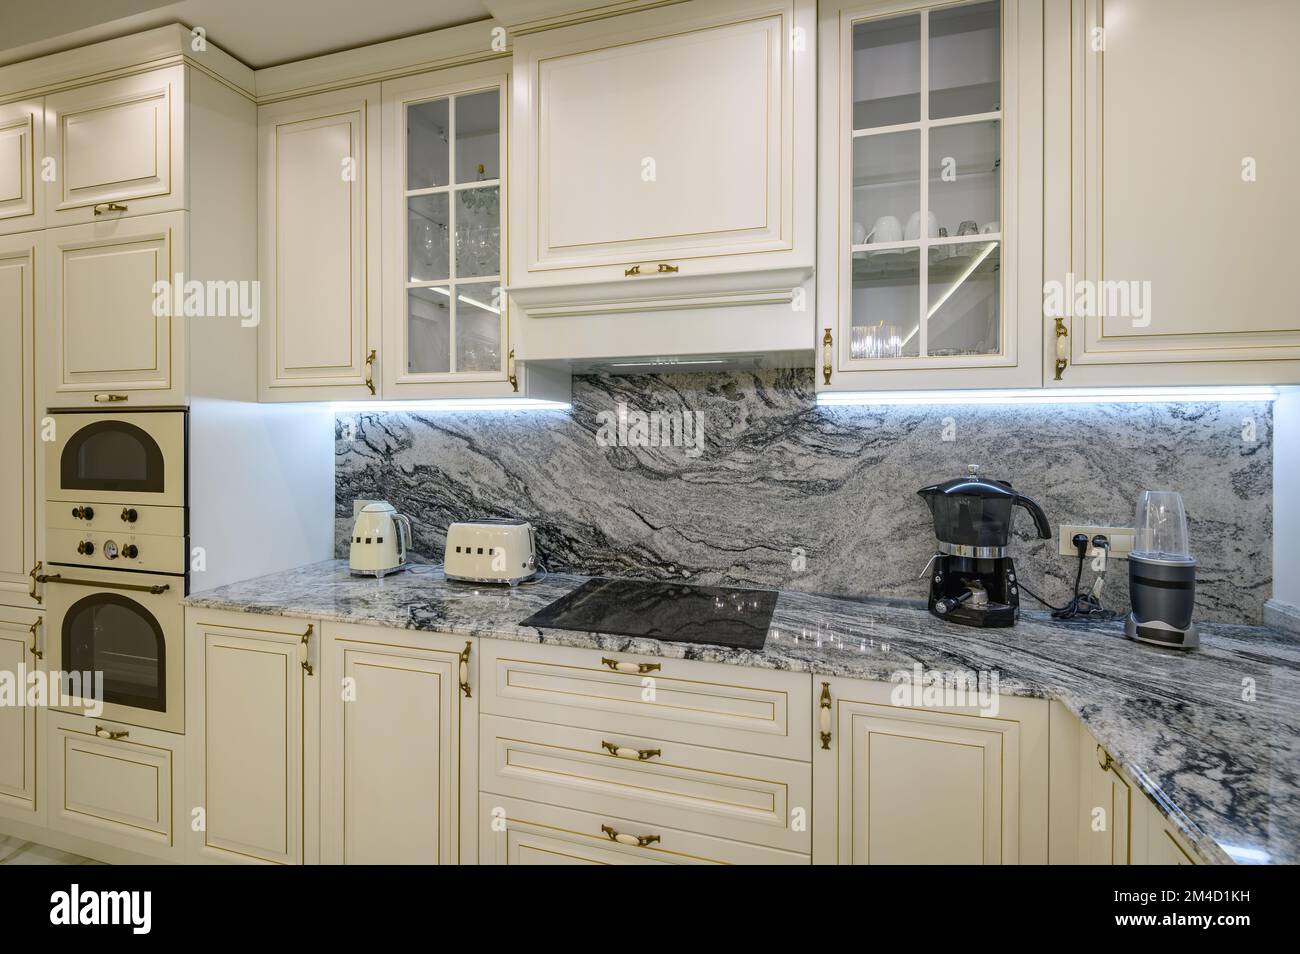 https://c8.alamy.com/comp/2M4D1KH/closeup-of-classic-cream-colored-kitchen-with-appliances-2M4D1KH.jpg